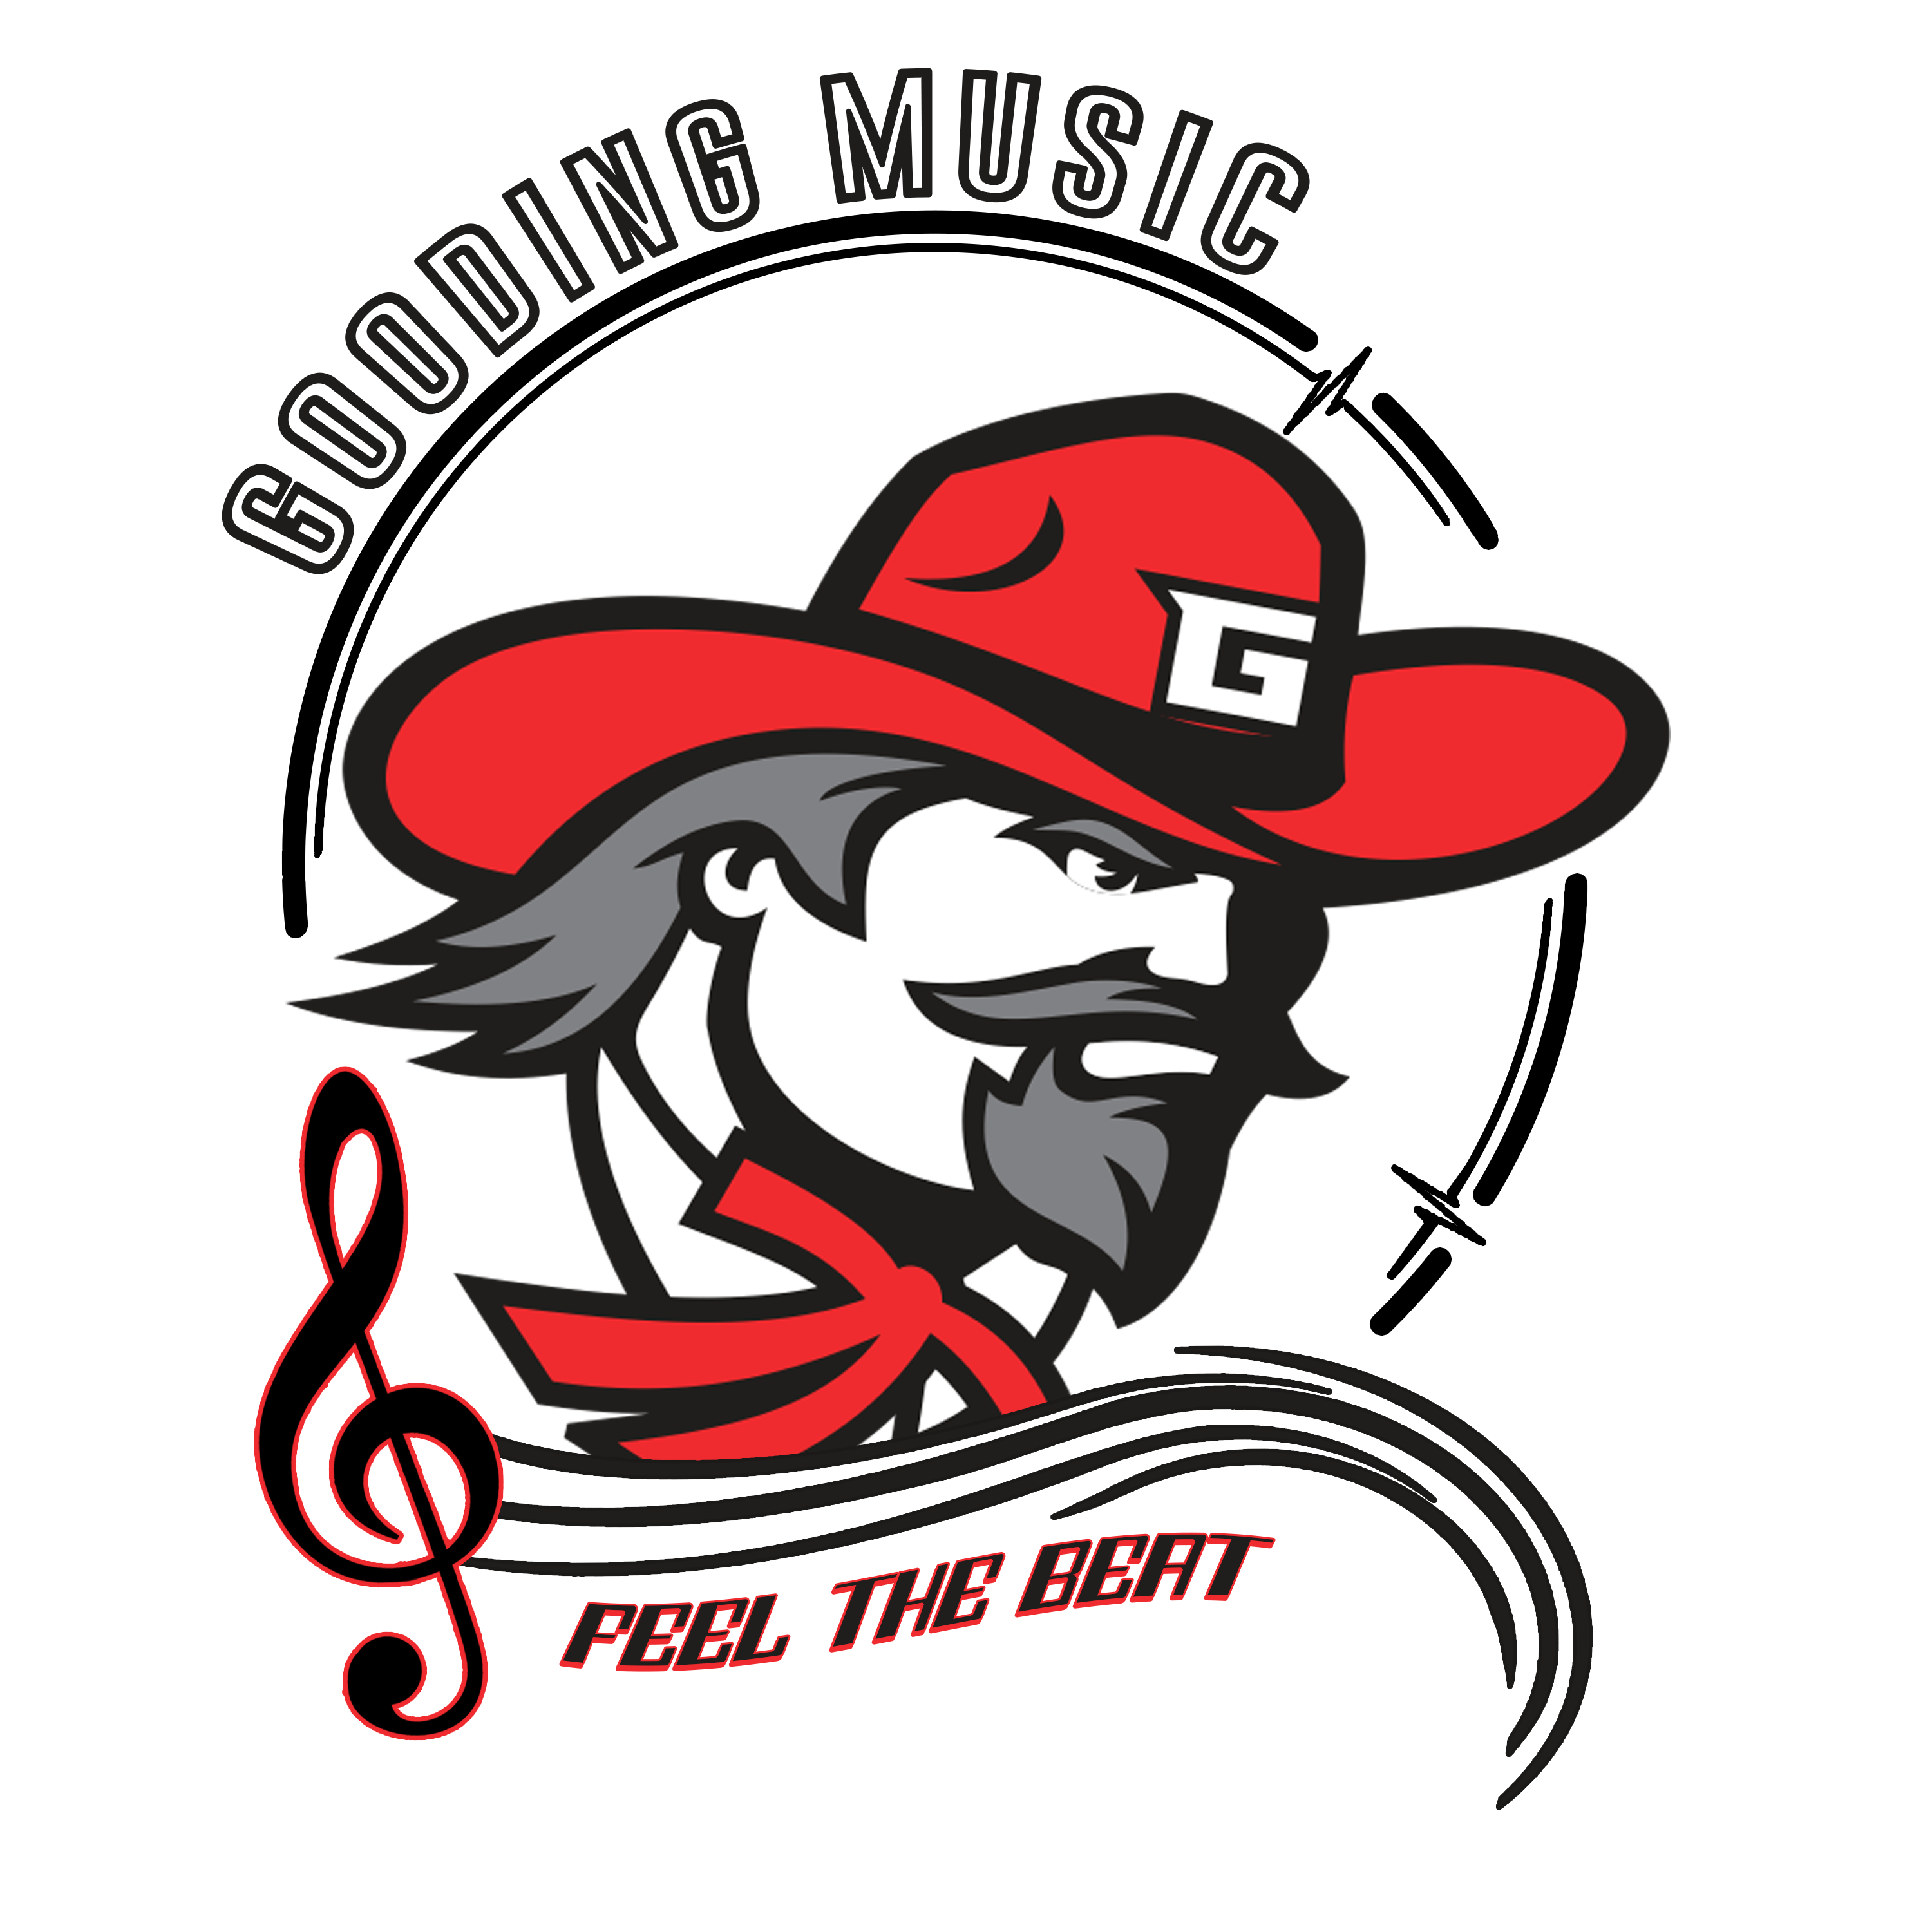 Gooding Schools Music Department Logo